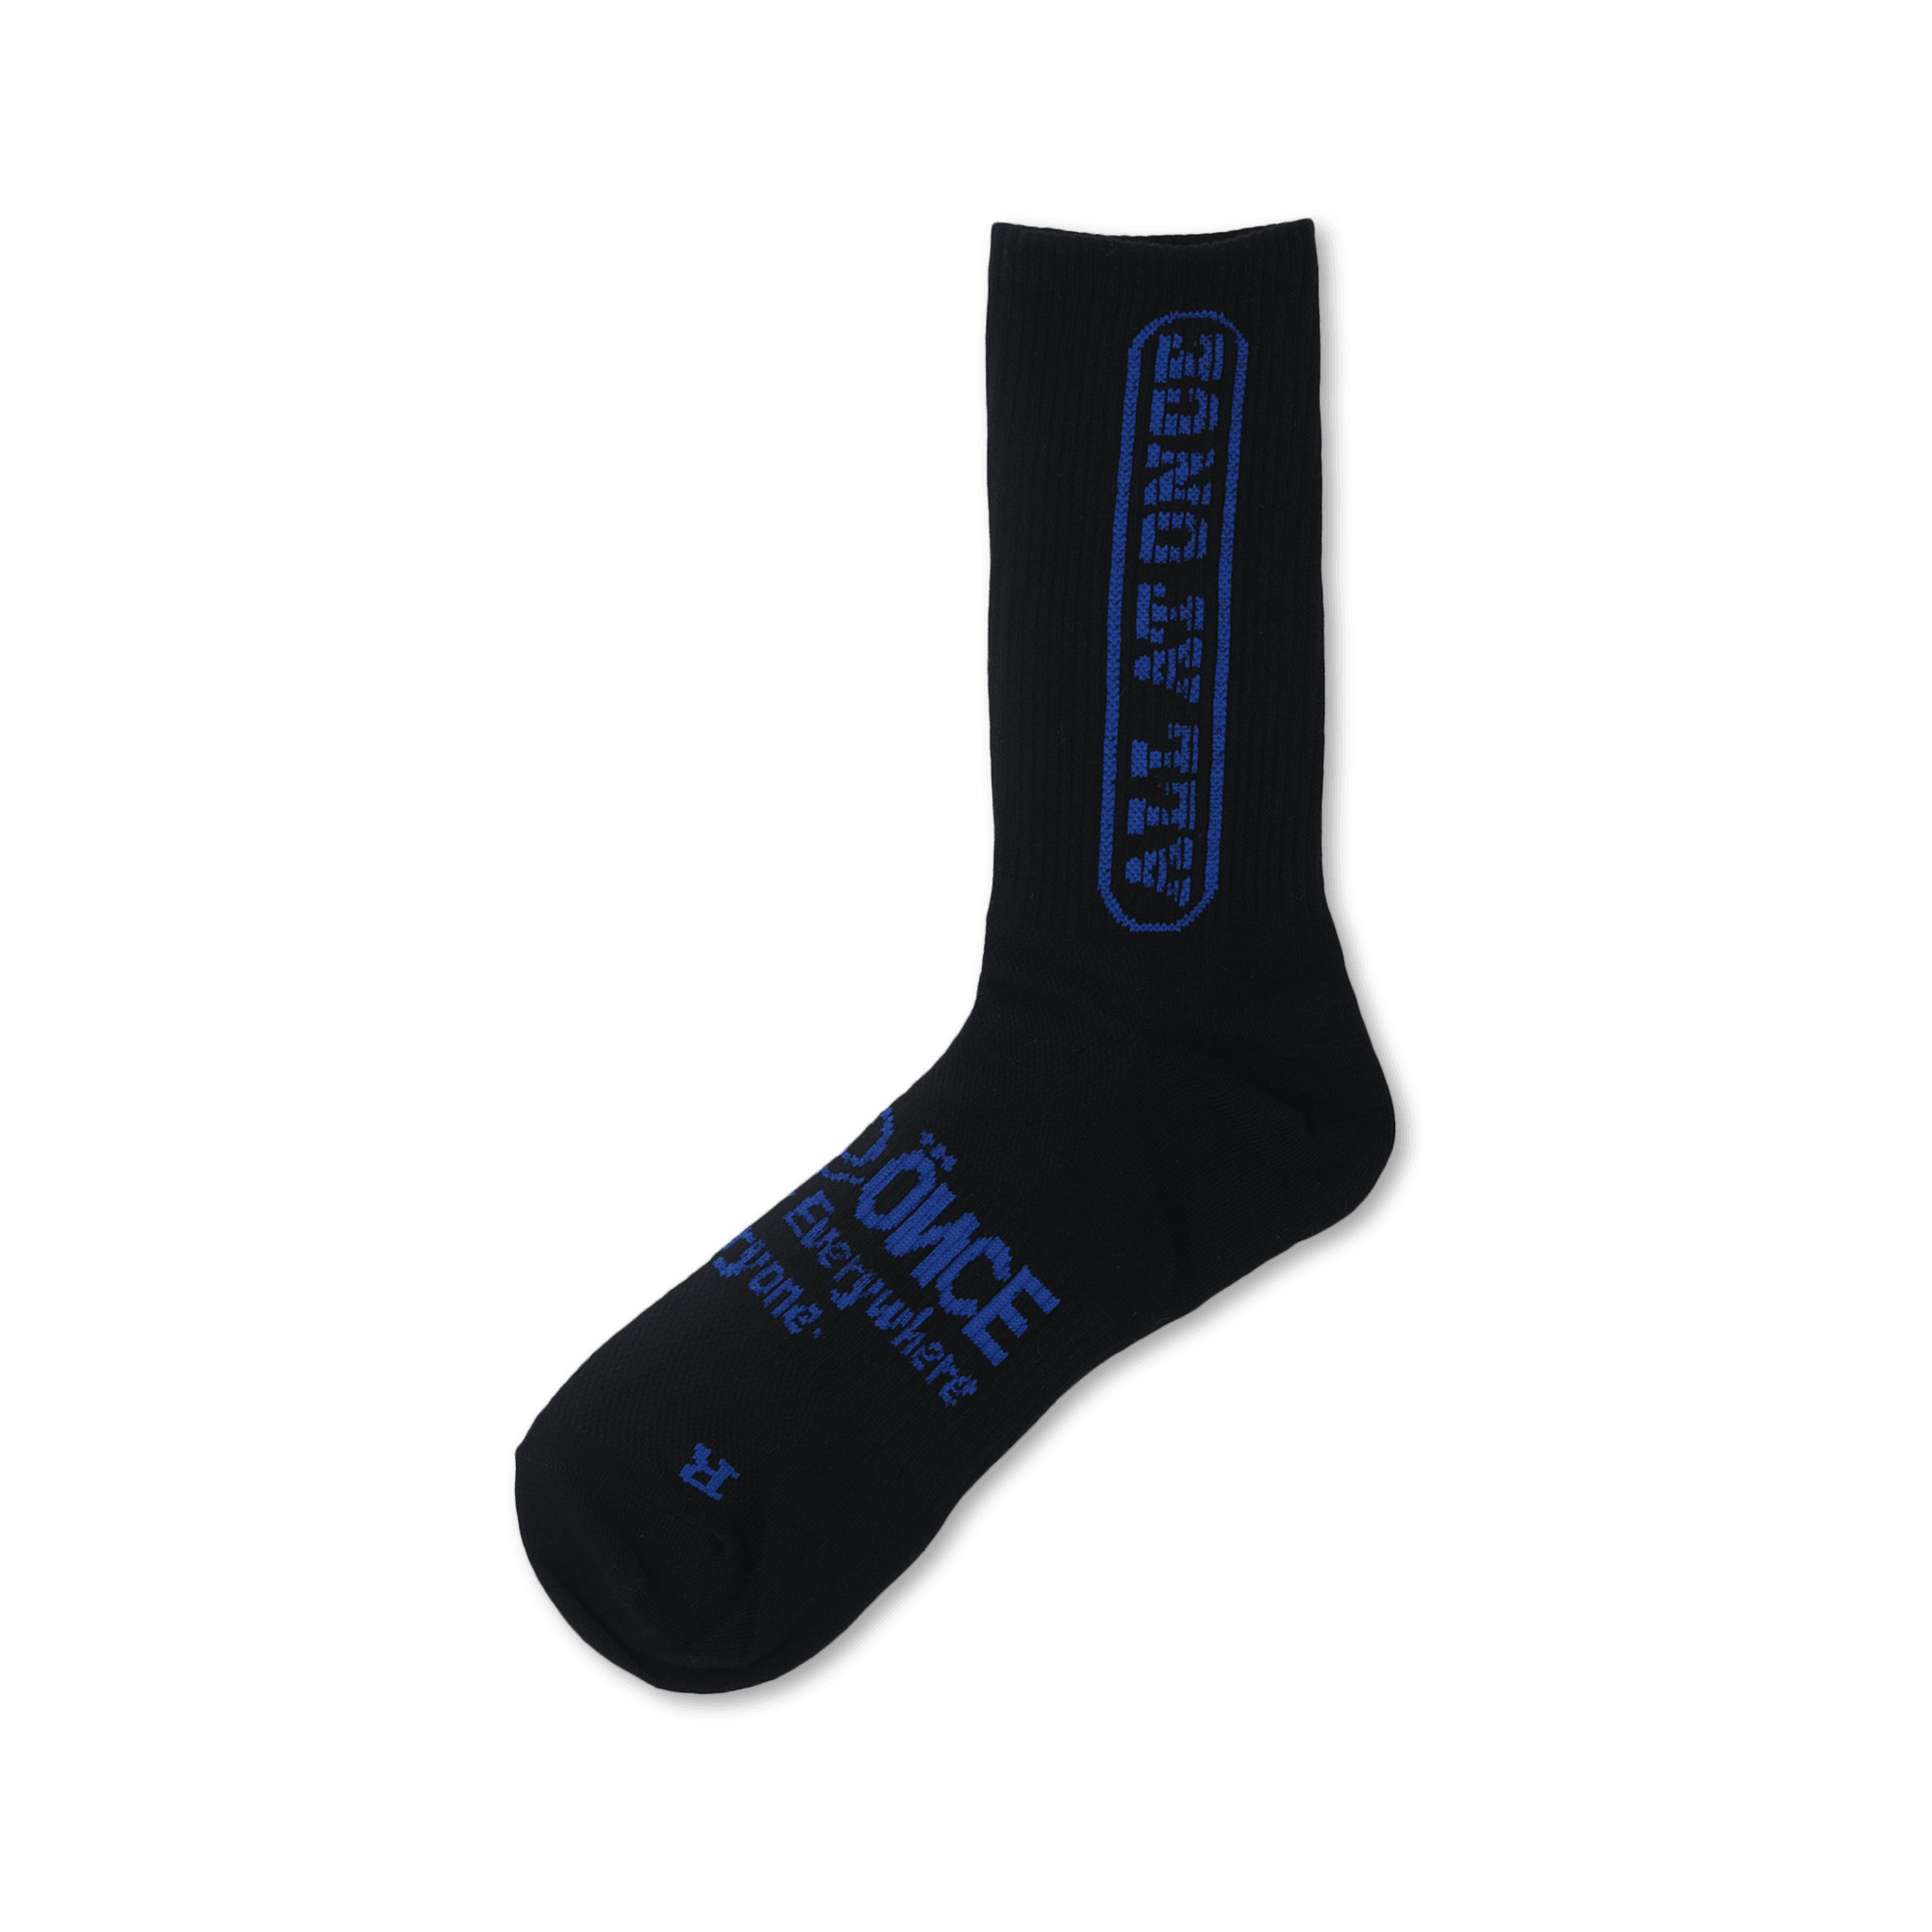 Glitch Socks - All@Once